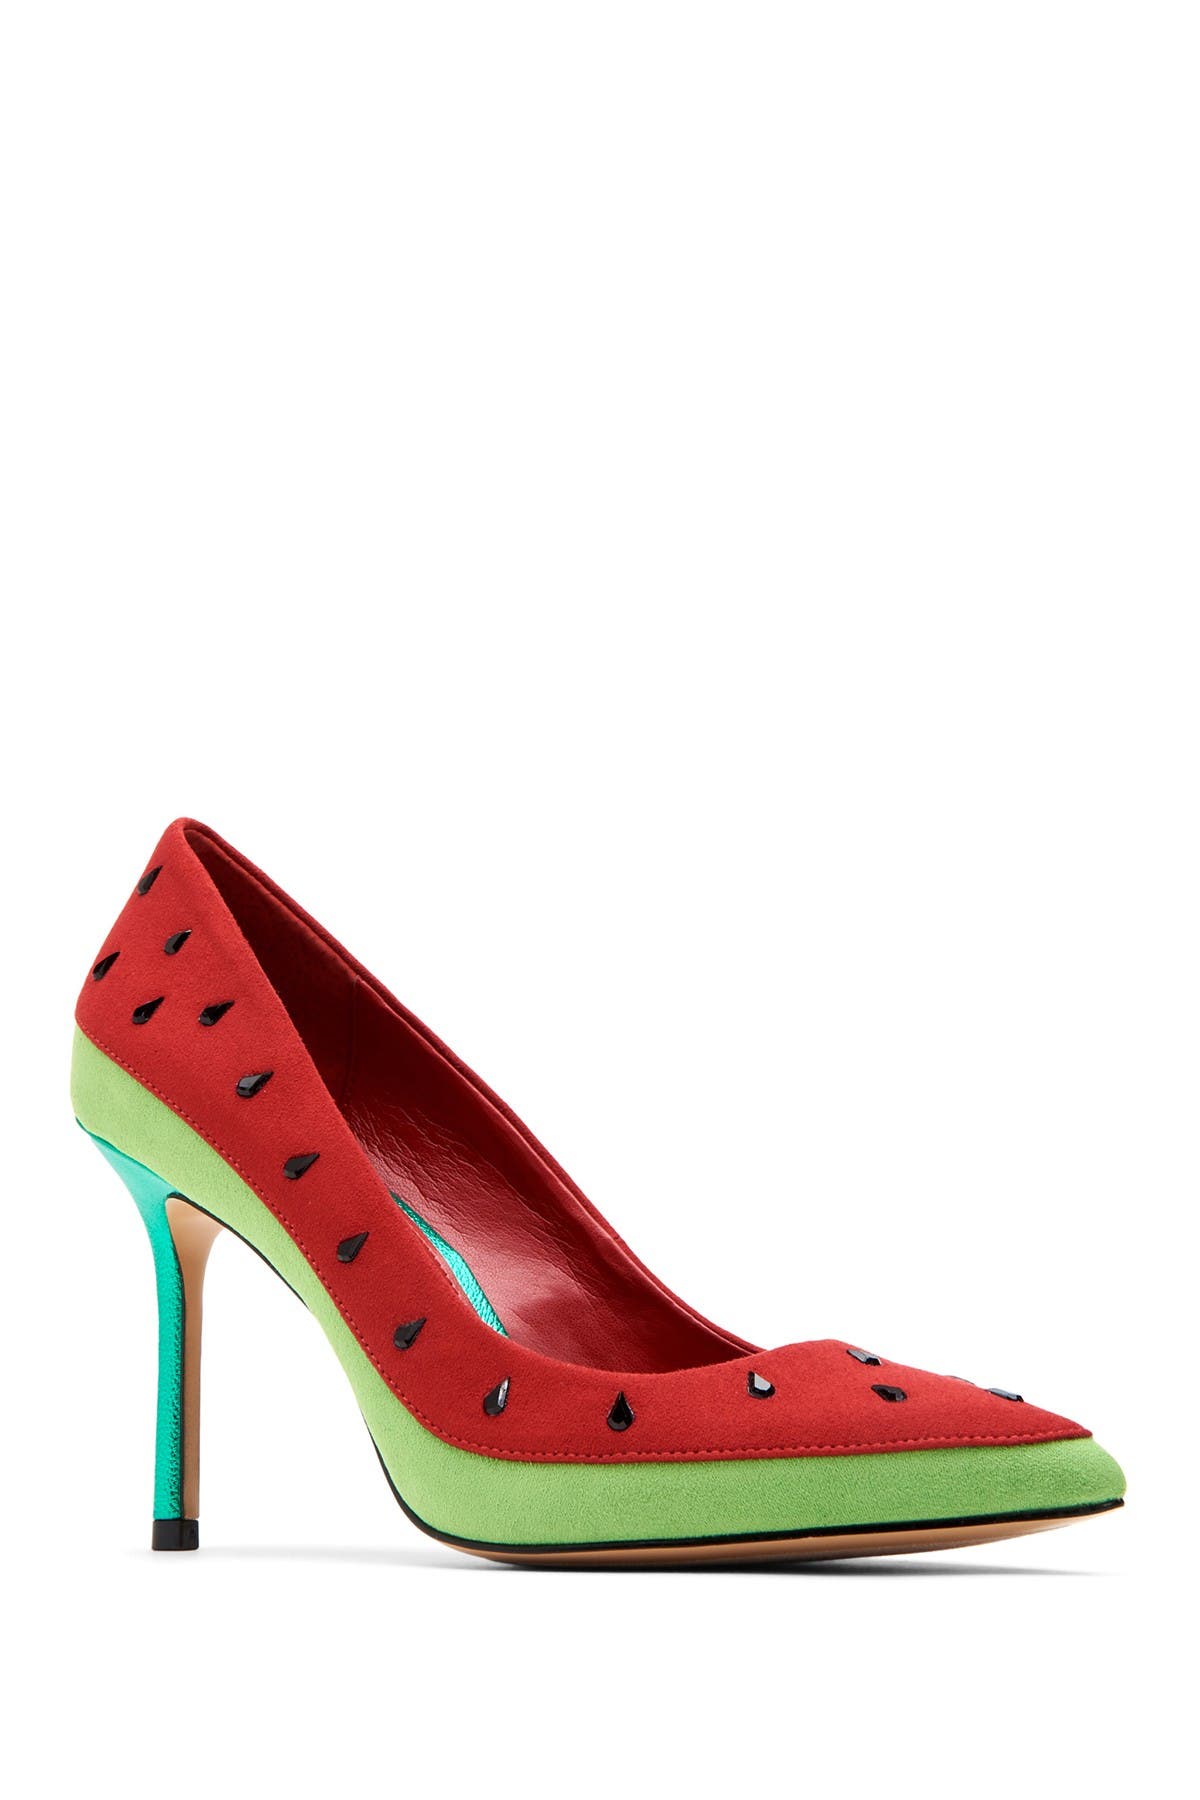 katy perry watermelon heels